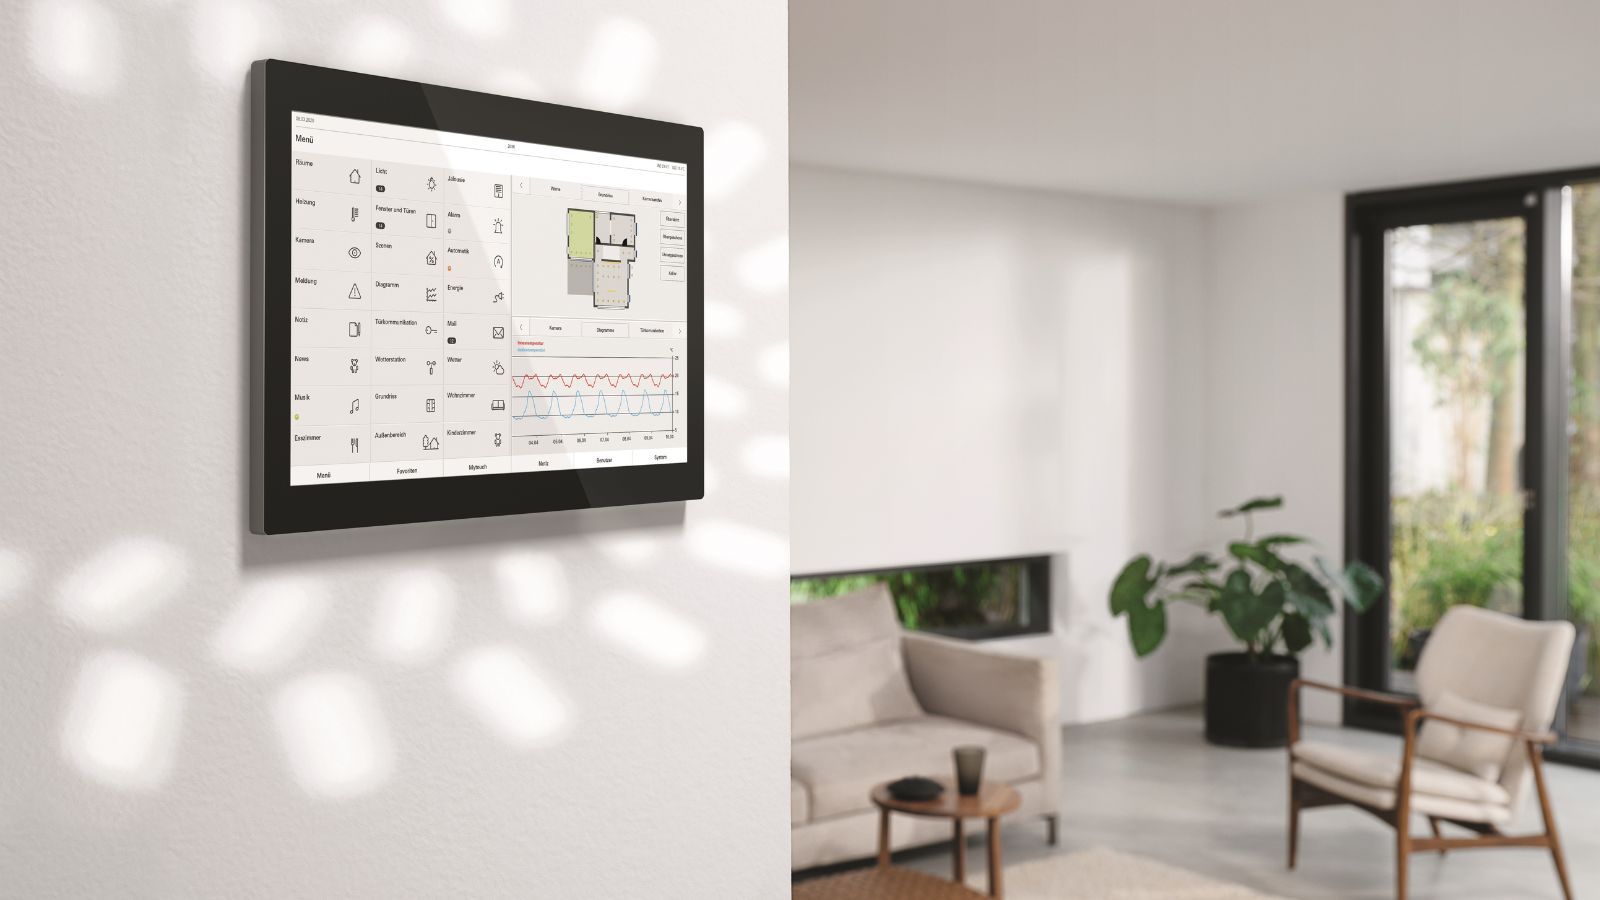 Gira HomeServer Quad Client Display in the living room